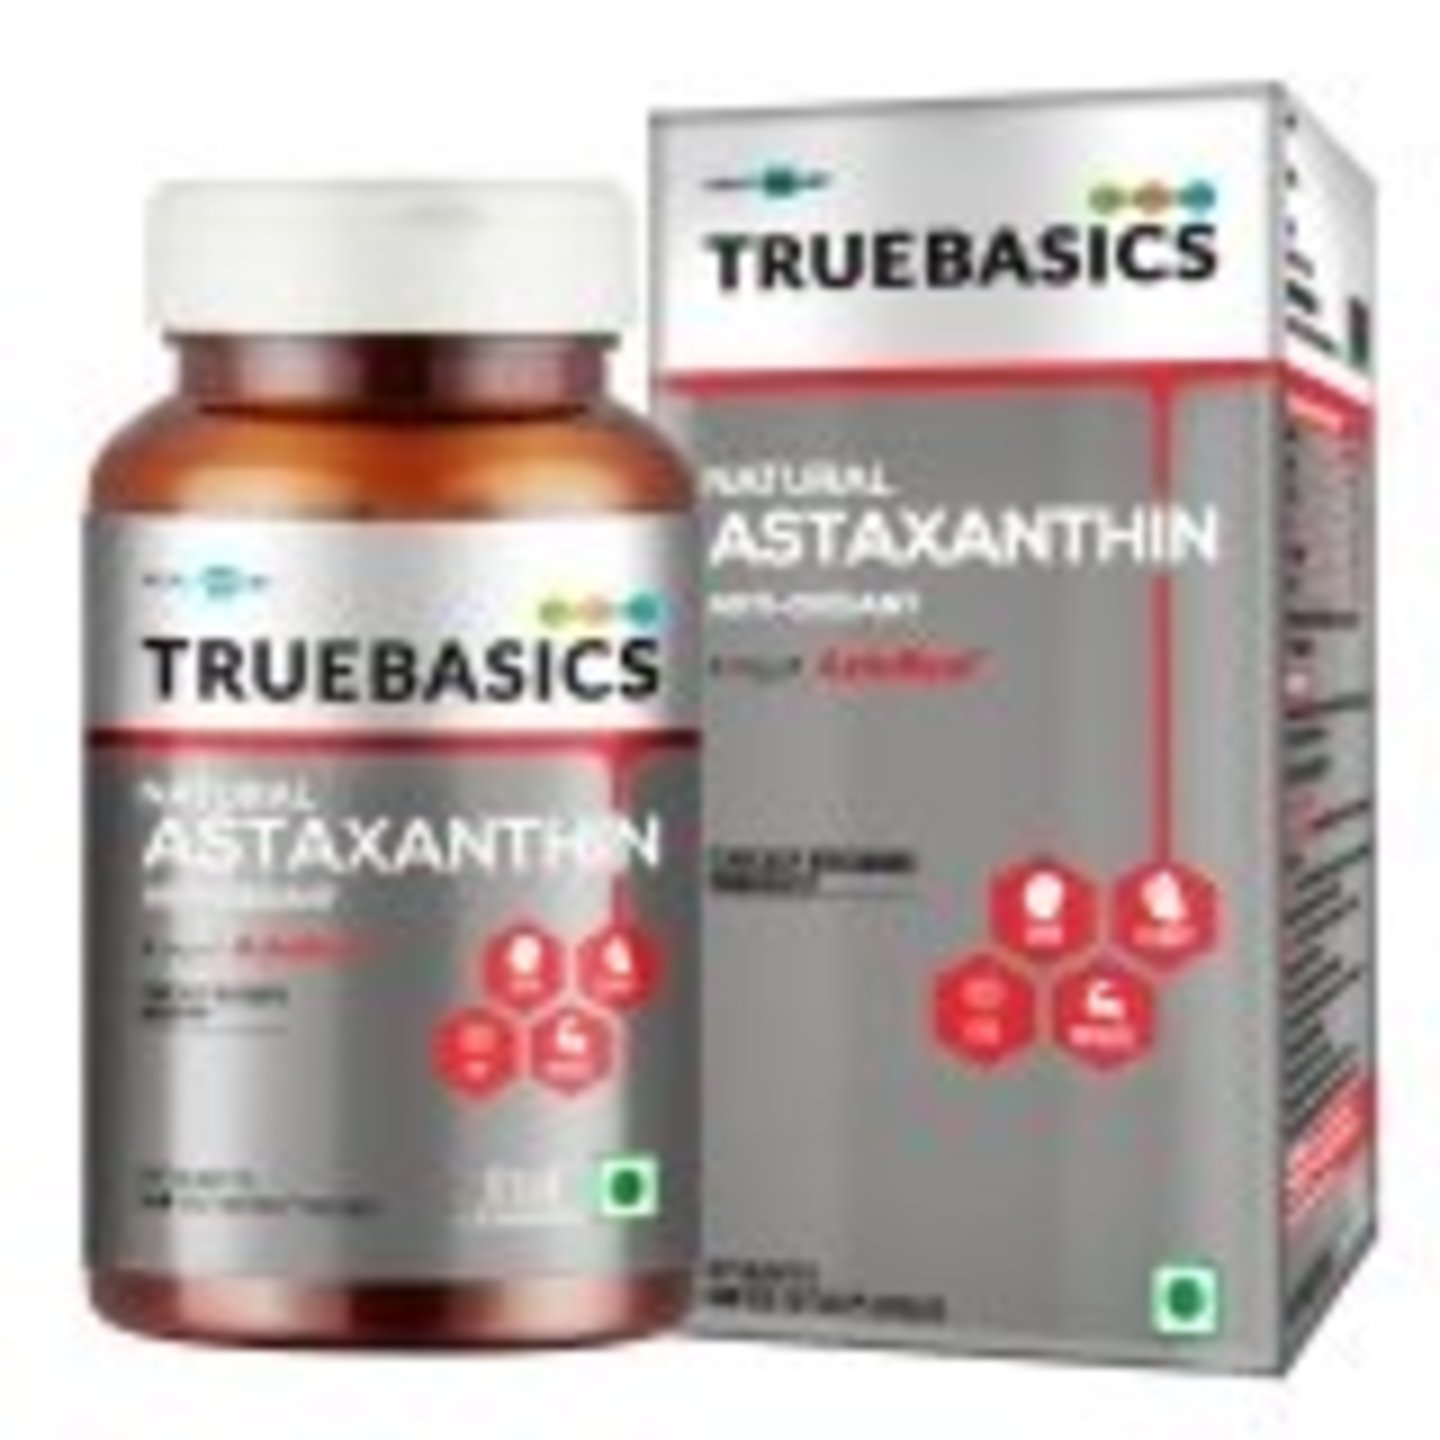 MastMart TrueBasics Astaxanthin 4mg, 60 capsules